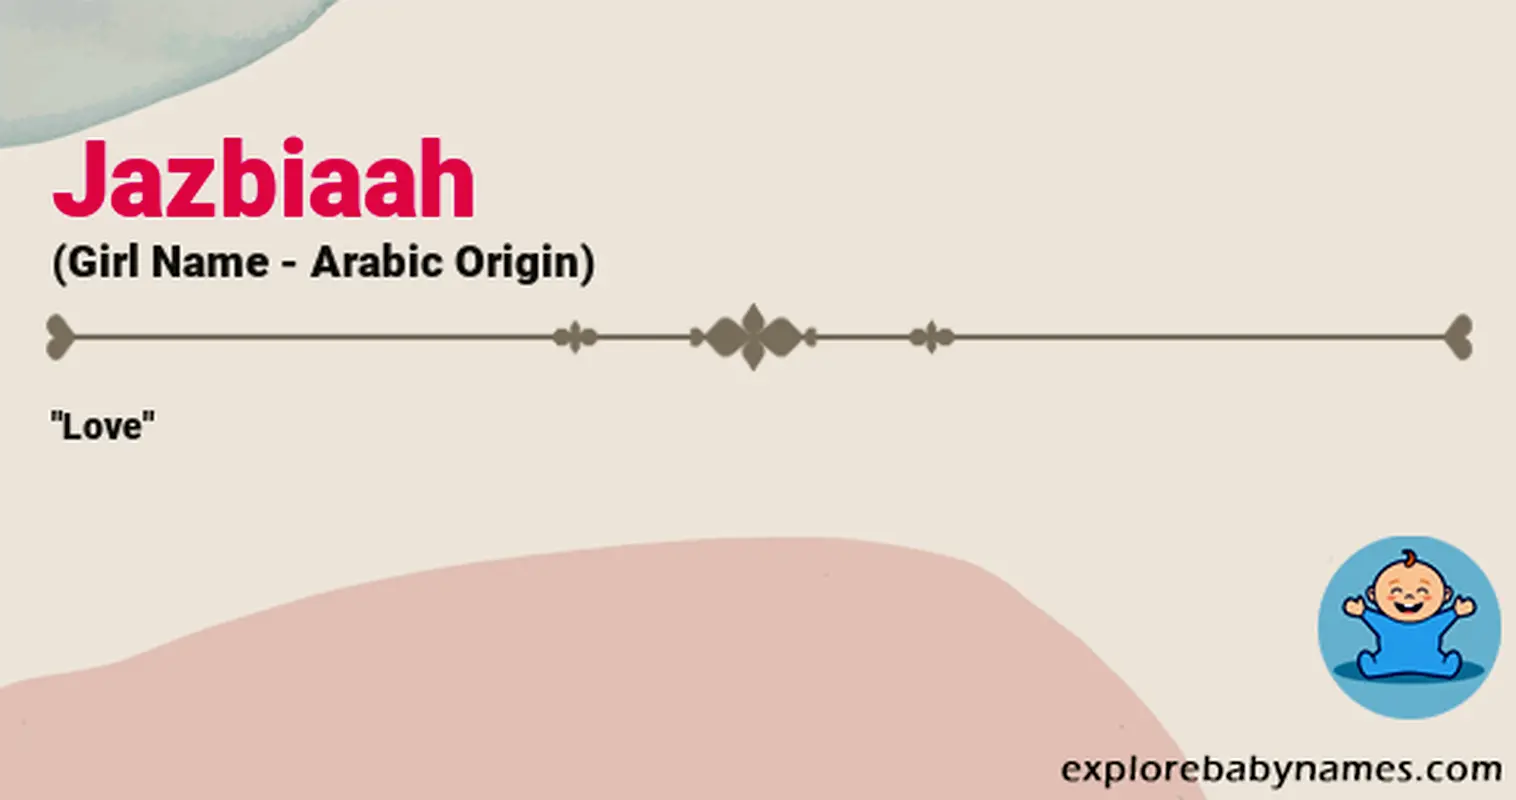 Meaning of Jazbiaah